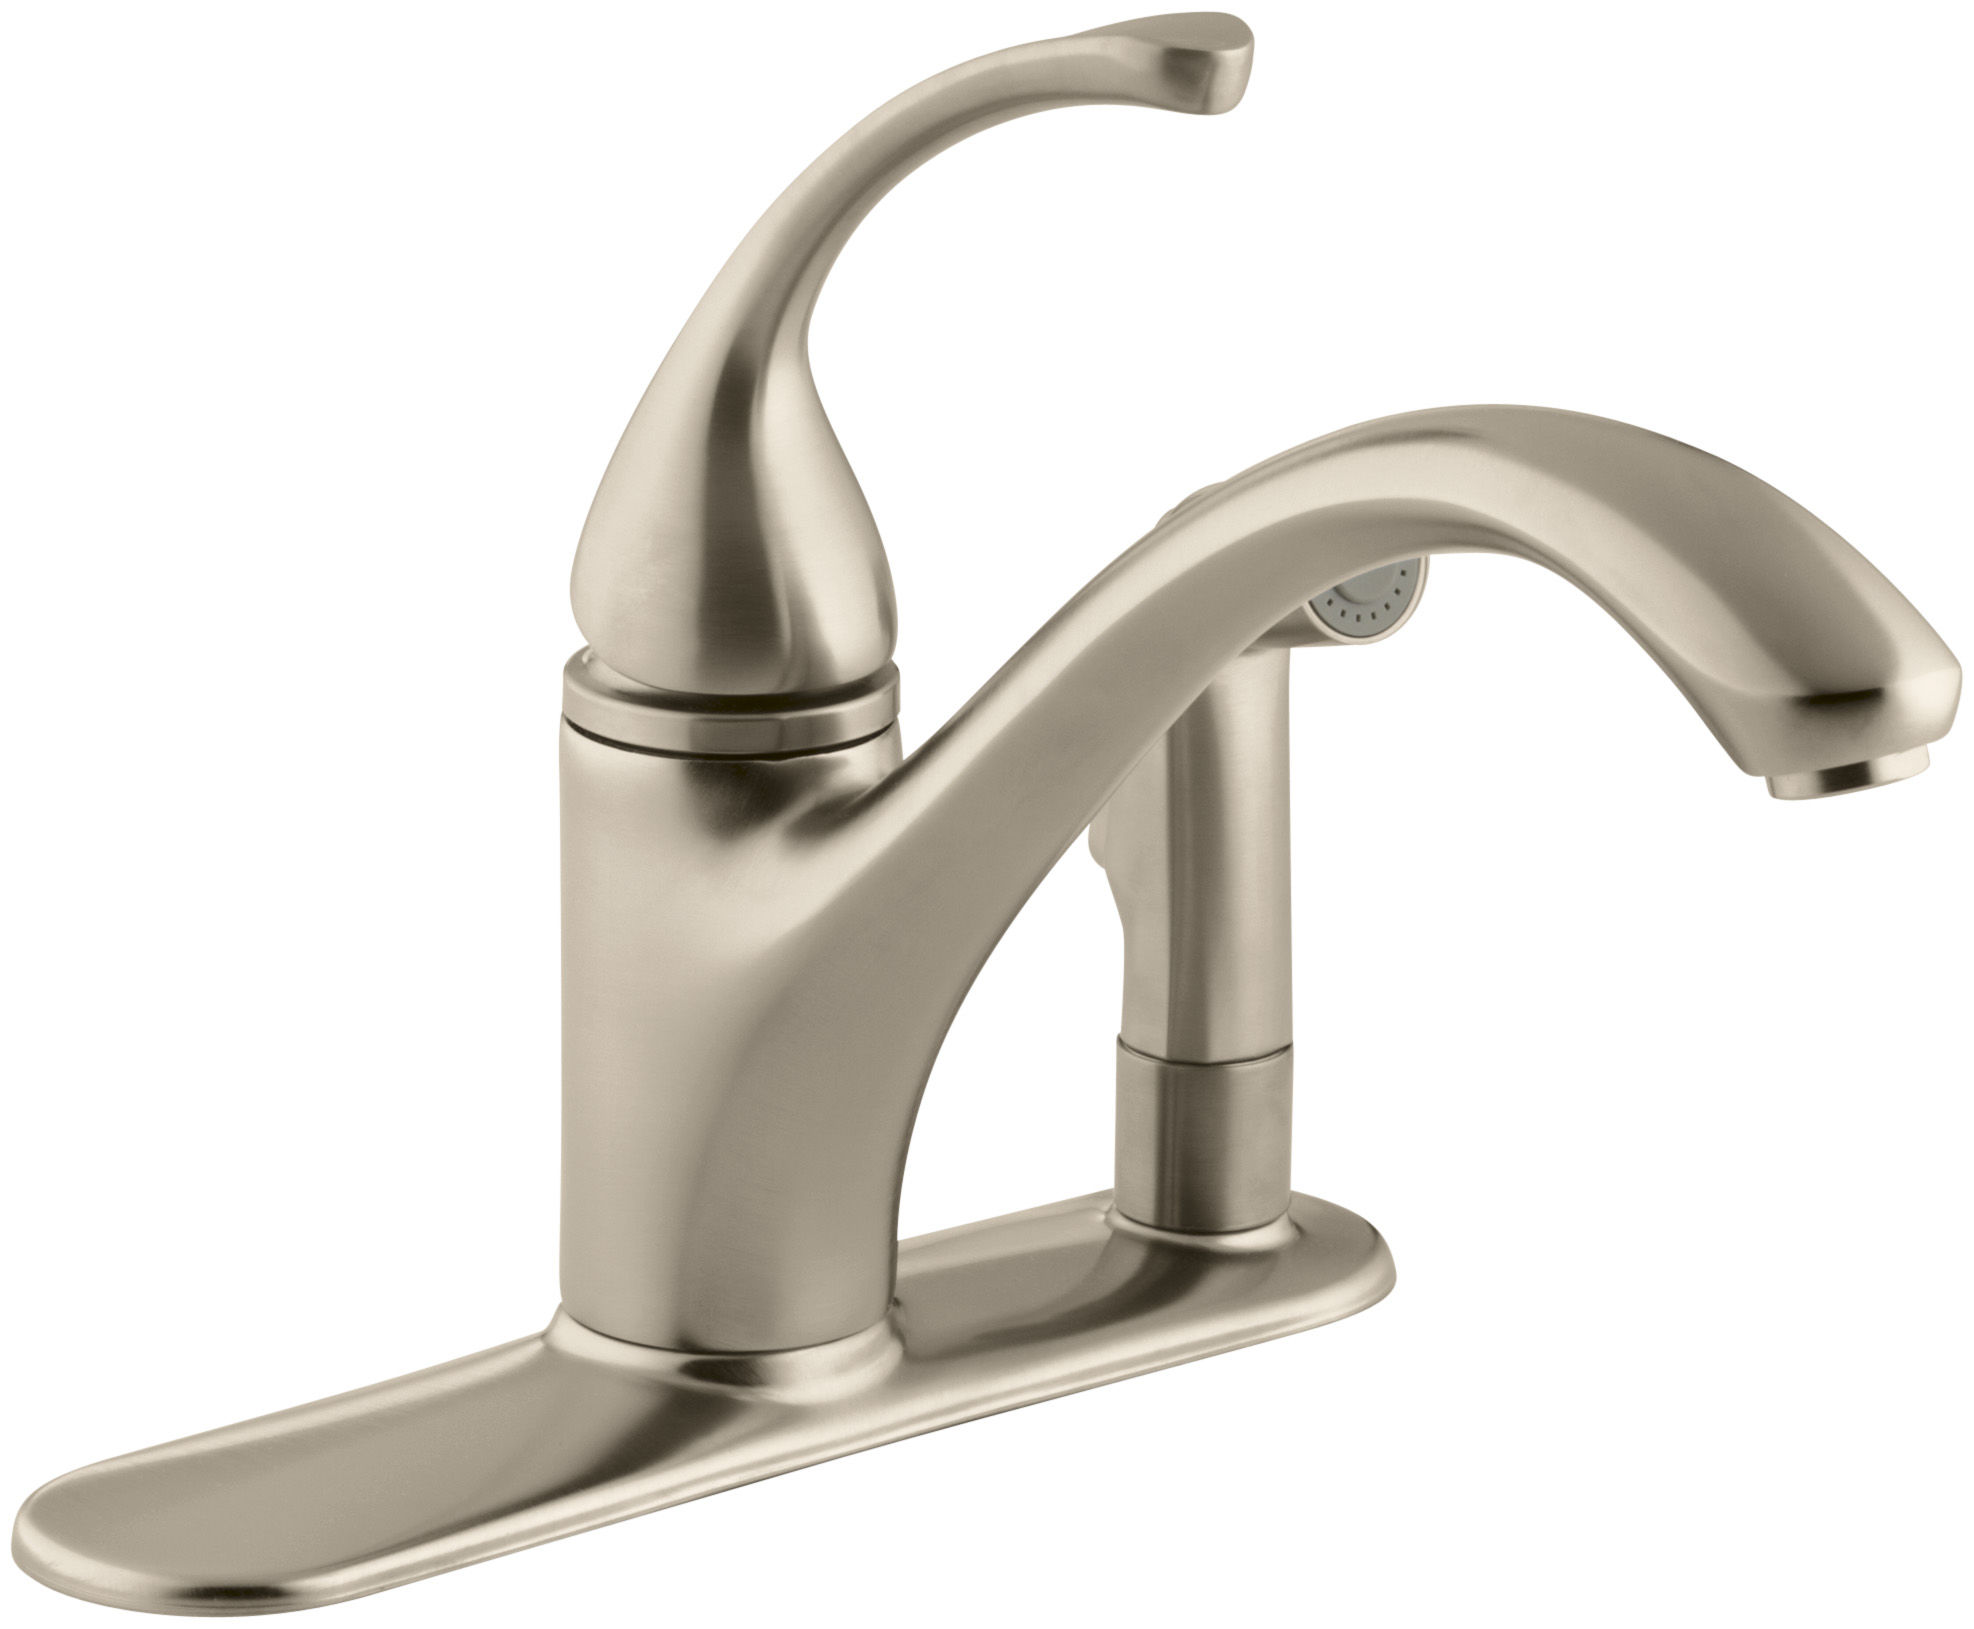 Kohler A112.18.1 Kitchen Faucet : Identifying Your Faucet Model Kohler